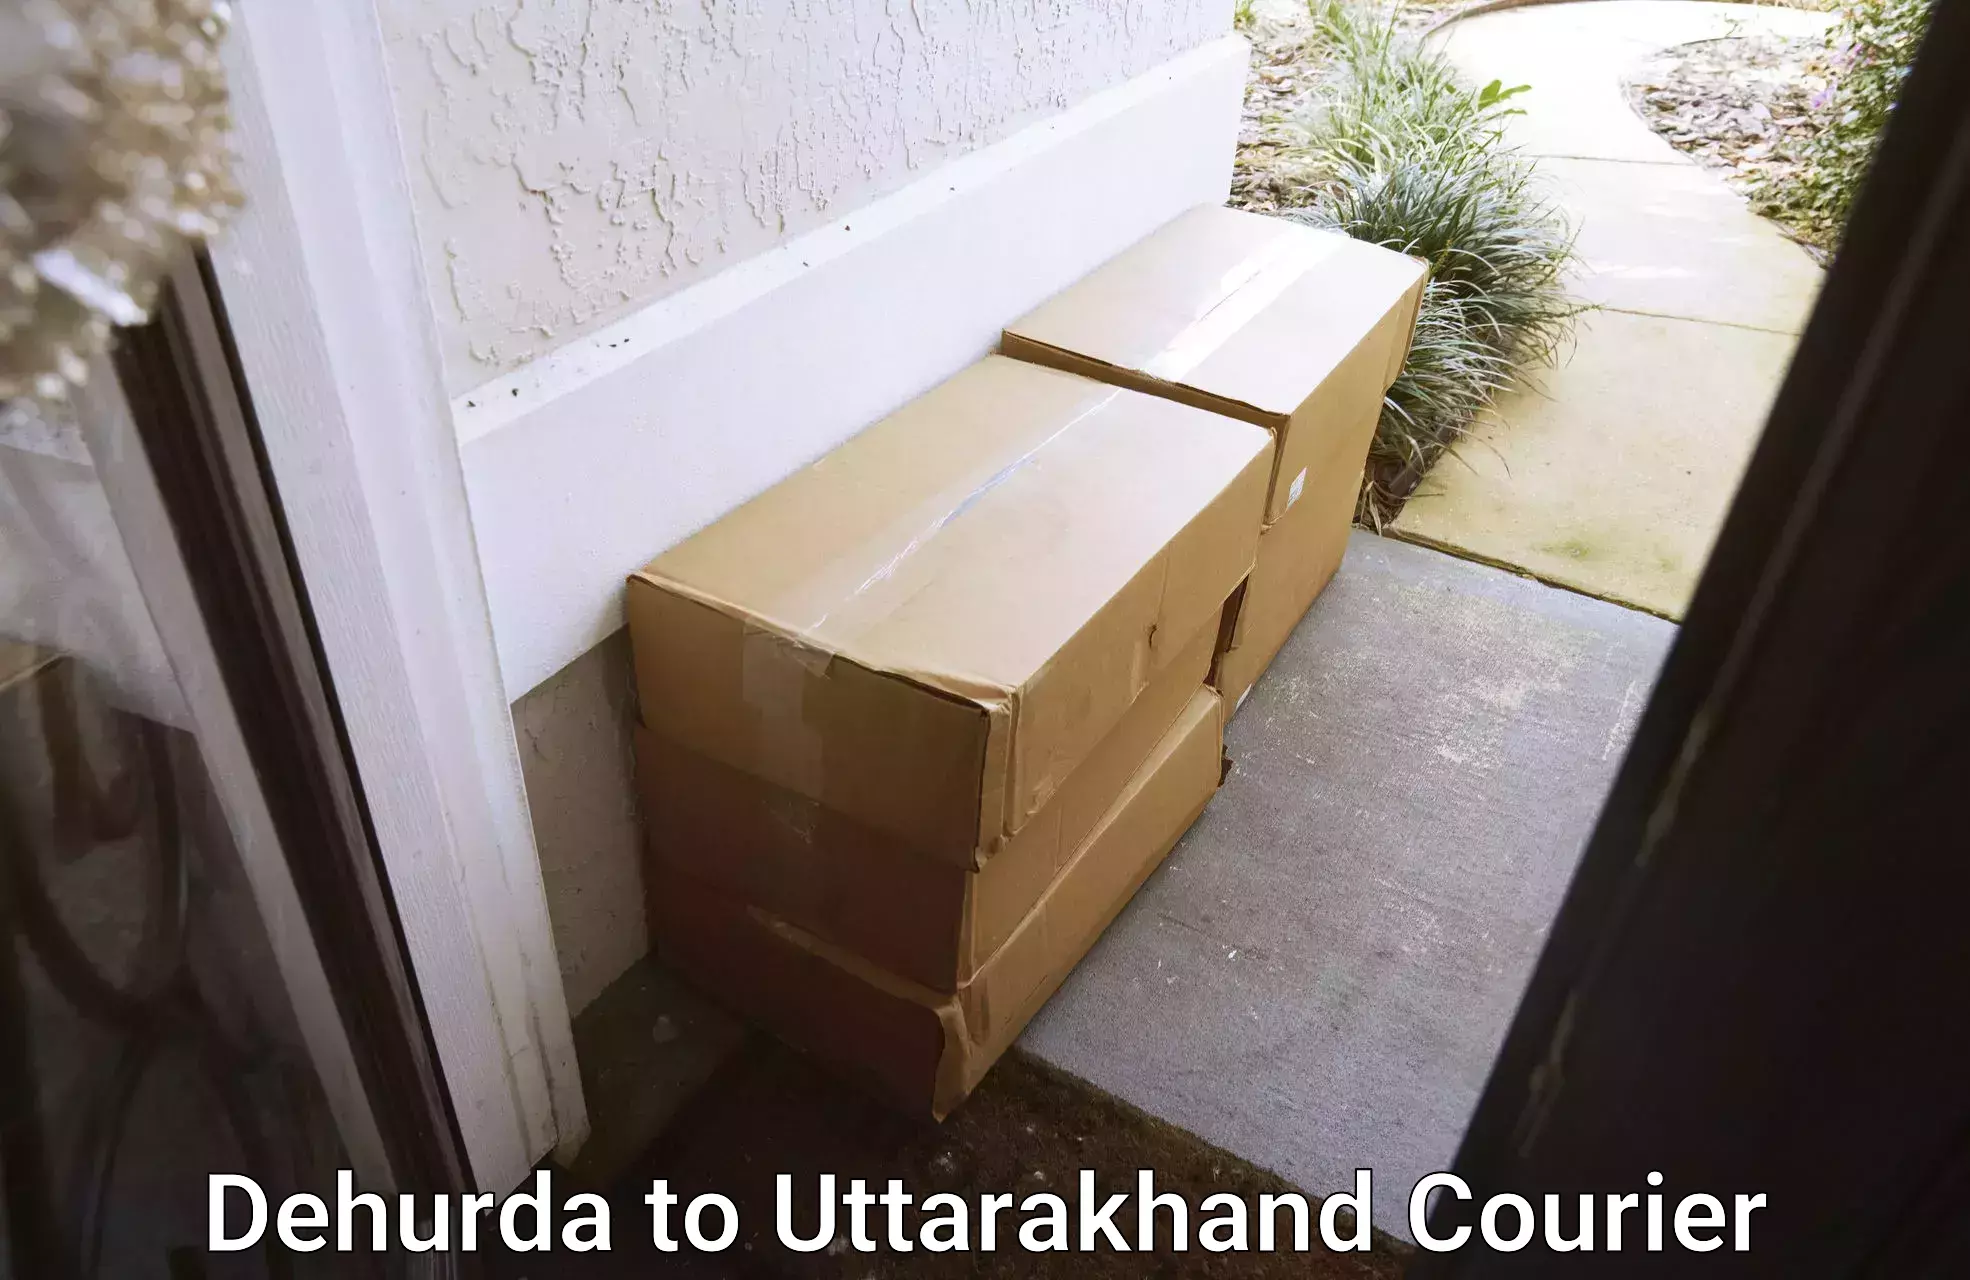 Doorstep parcel pickup in Dehurda to Ranikhet